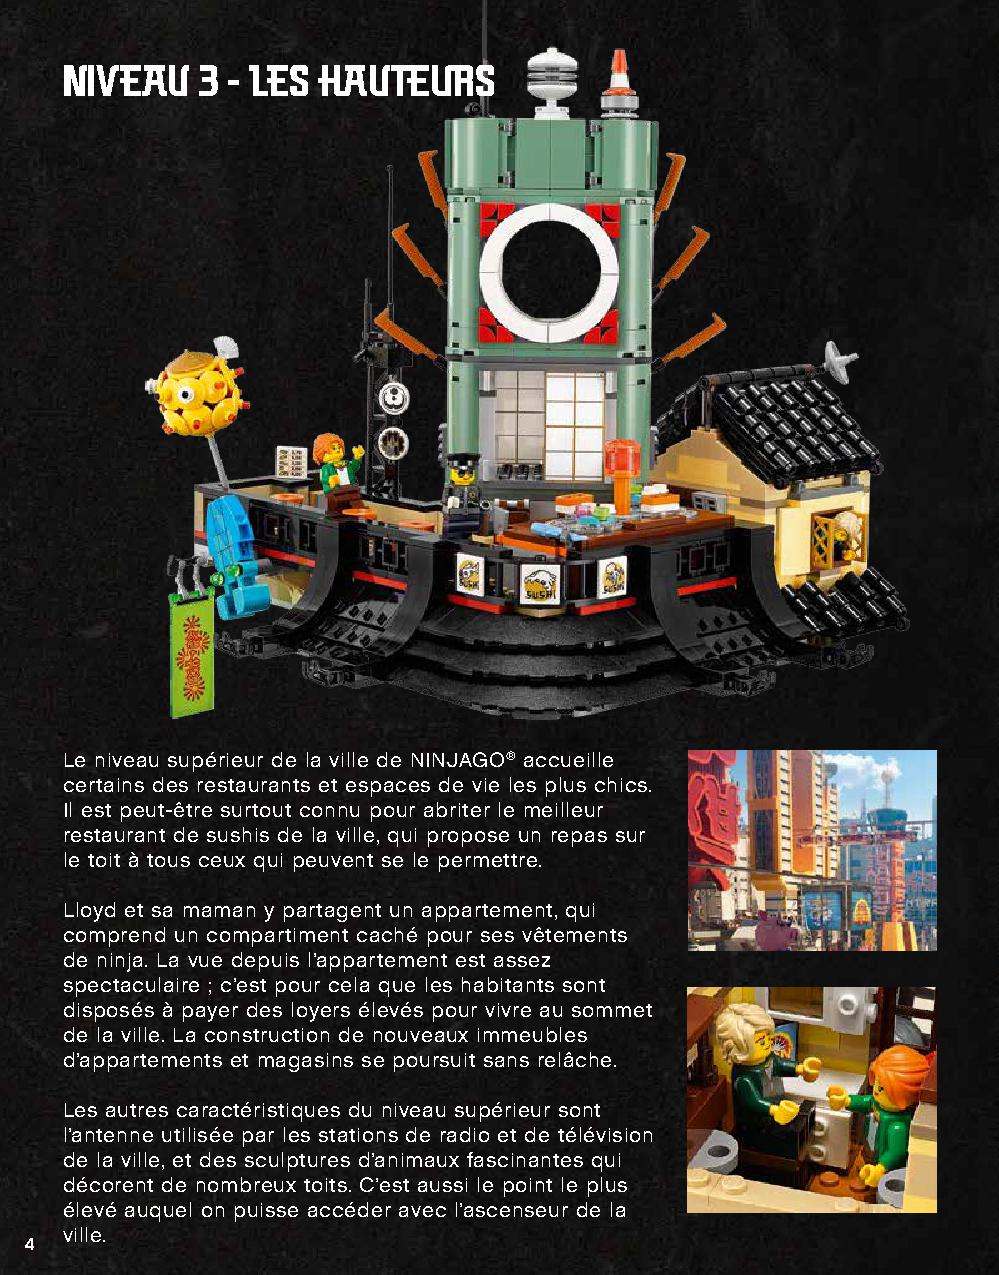 NINJAGO City 70620 LEGO information LEGO instructions 4 page